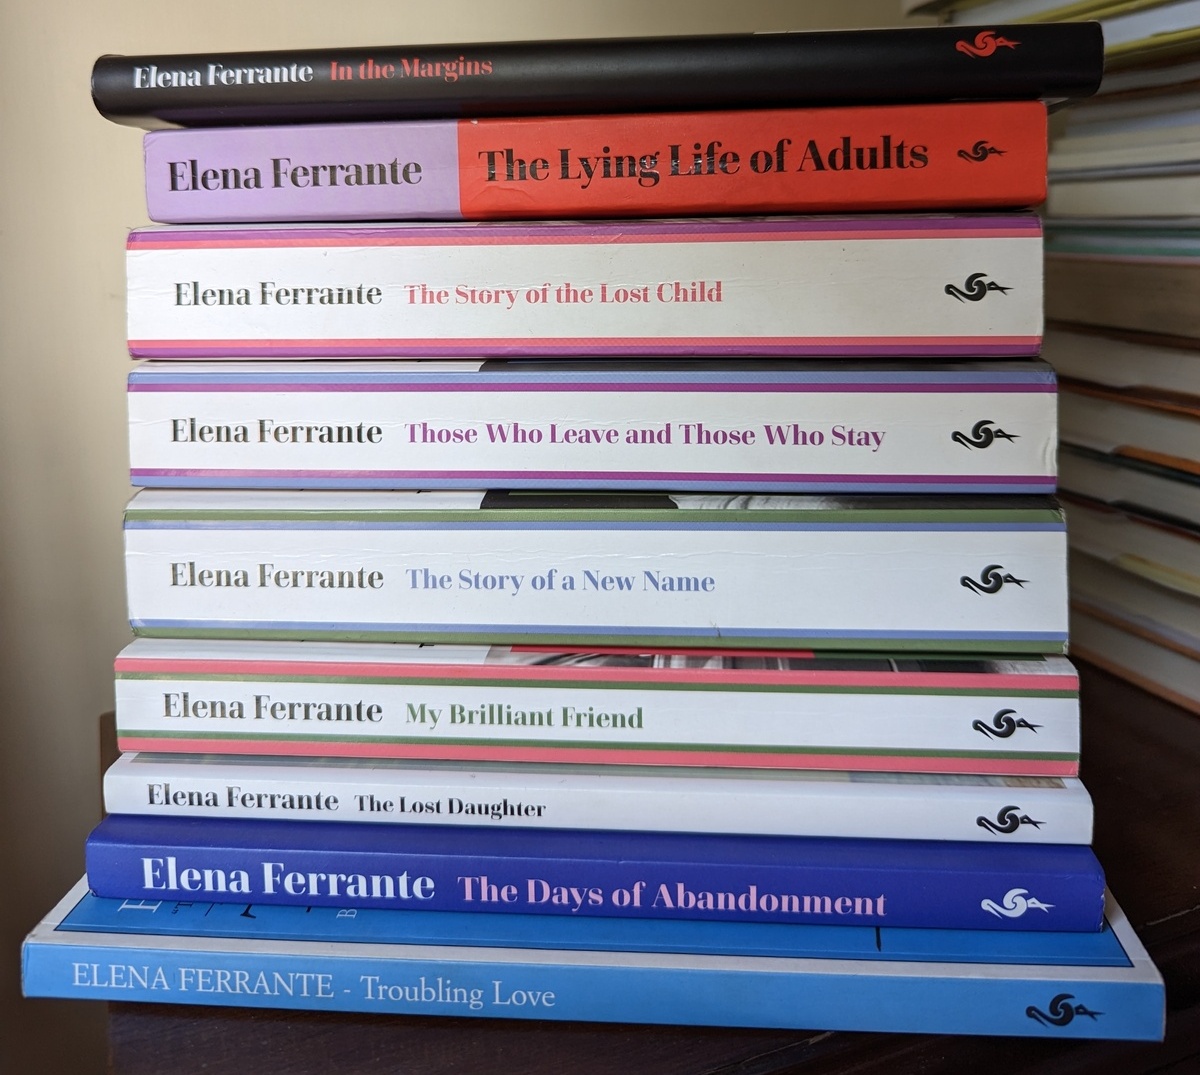 The Longing to Write: An Enquiry into the Elena Ferrante Phenomenon